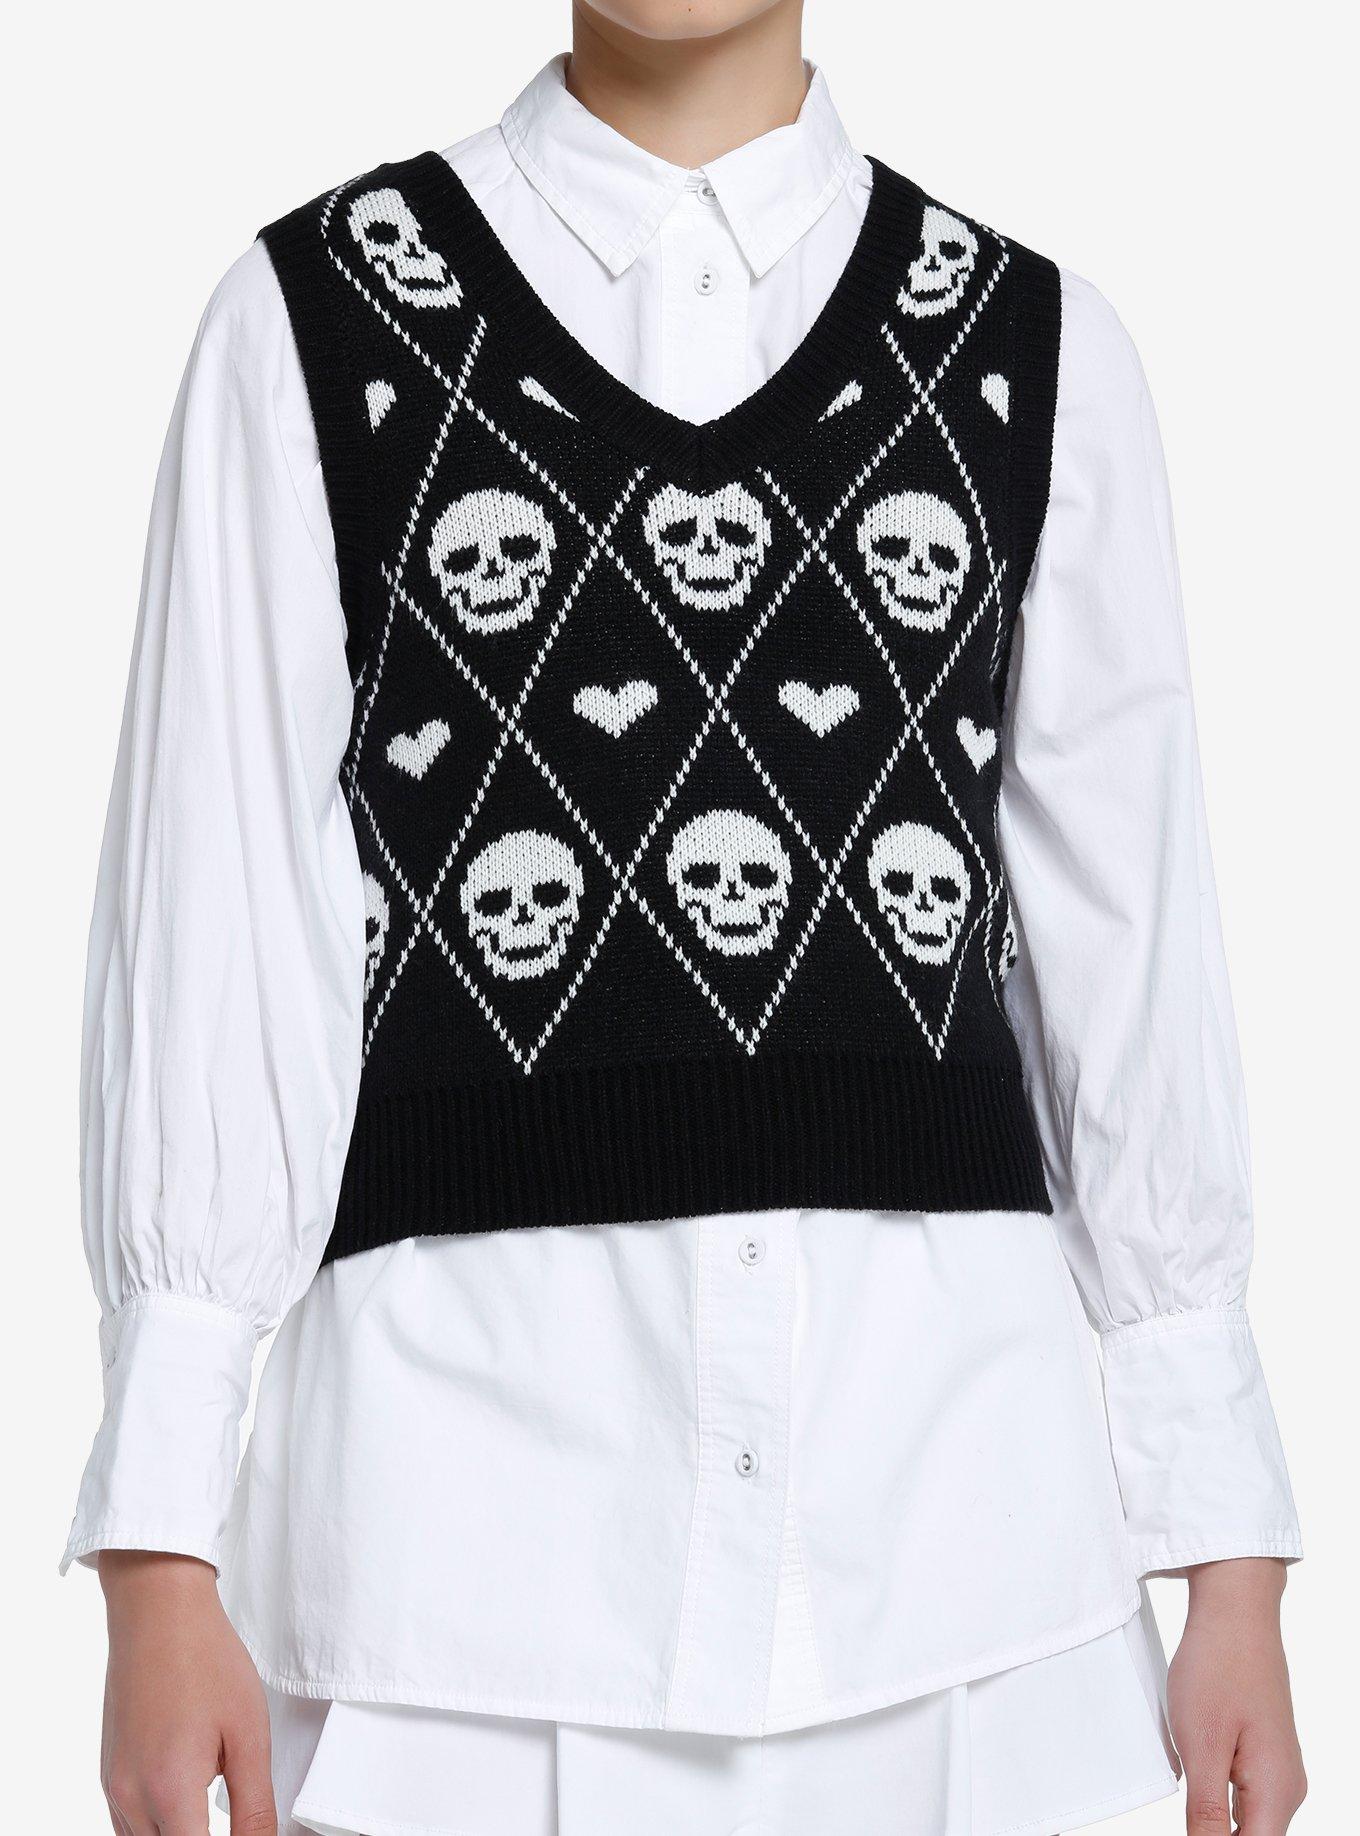 Social Collision Skull Heart Knit Girls Sweater Vest | Hot Topic